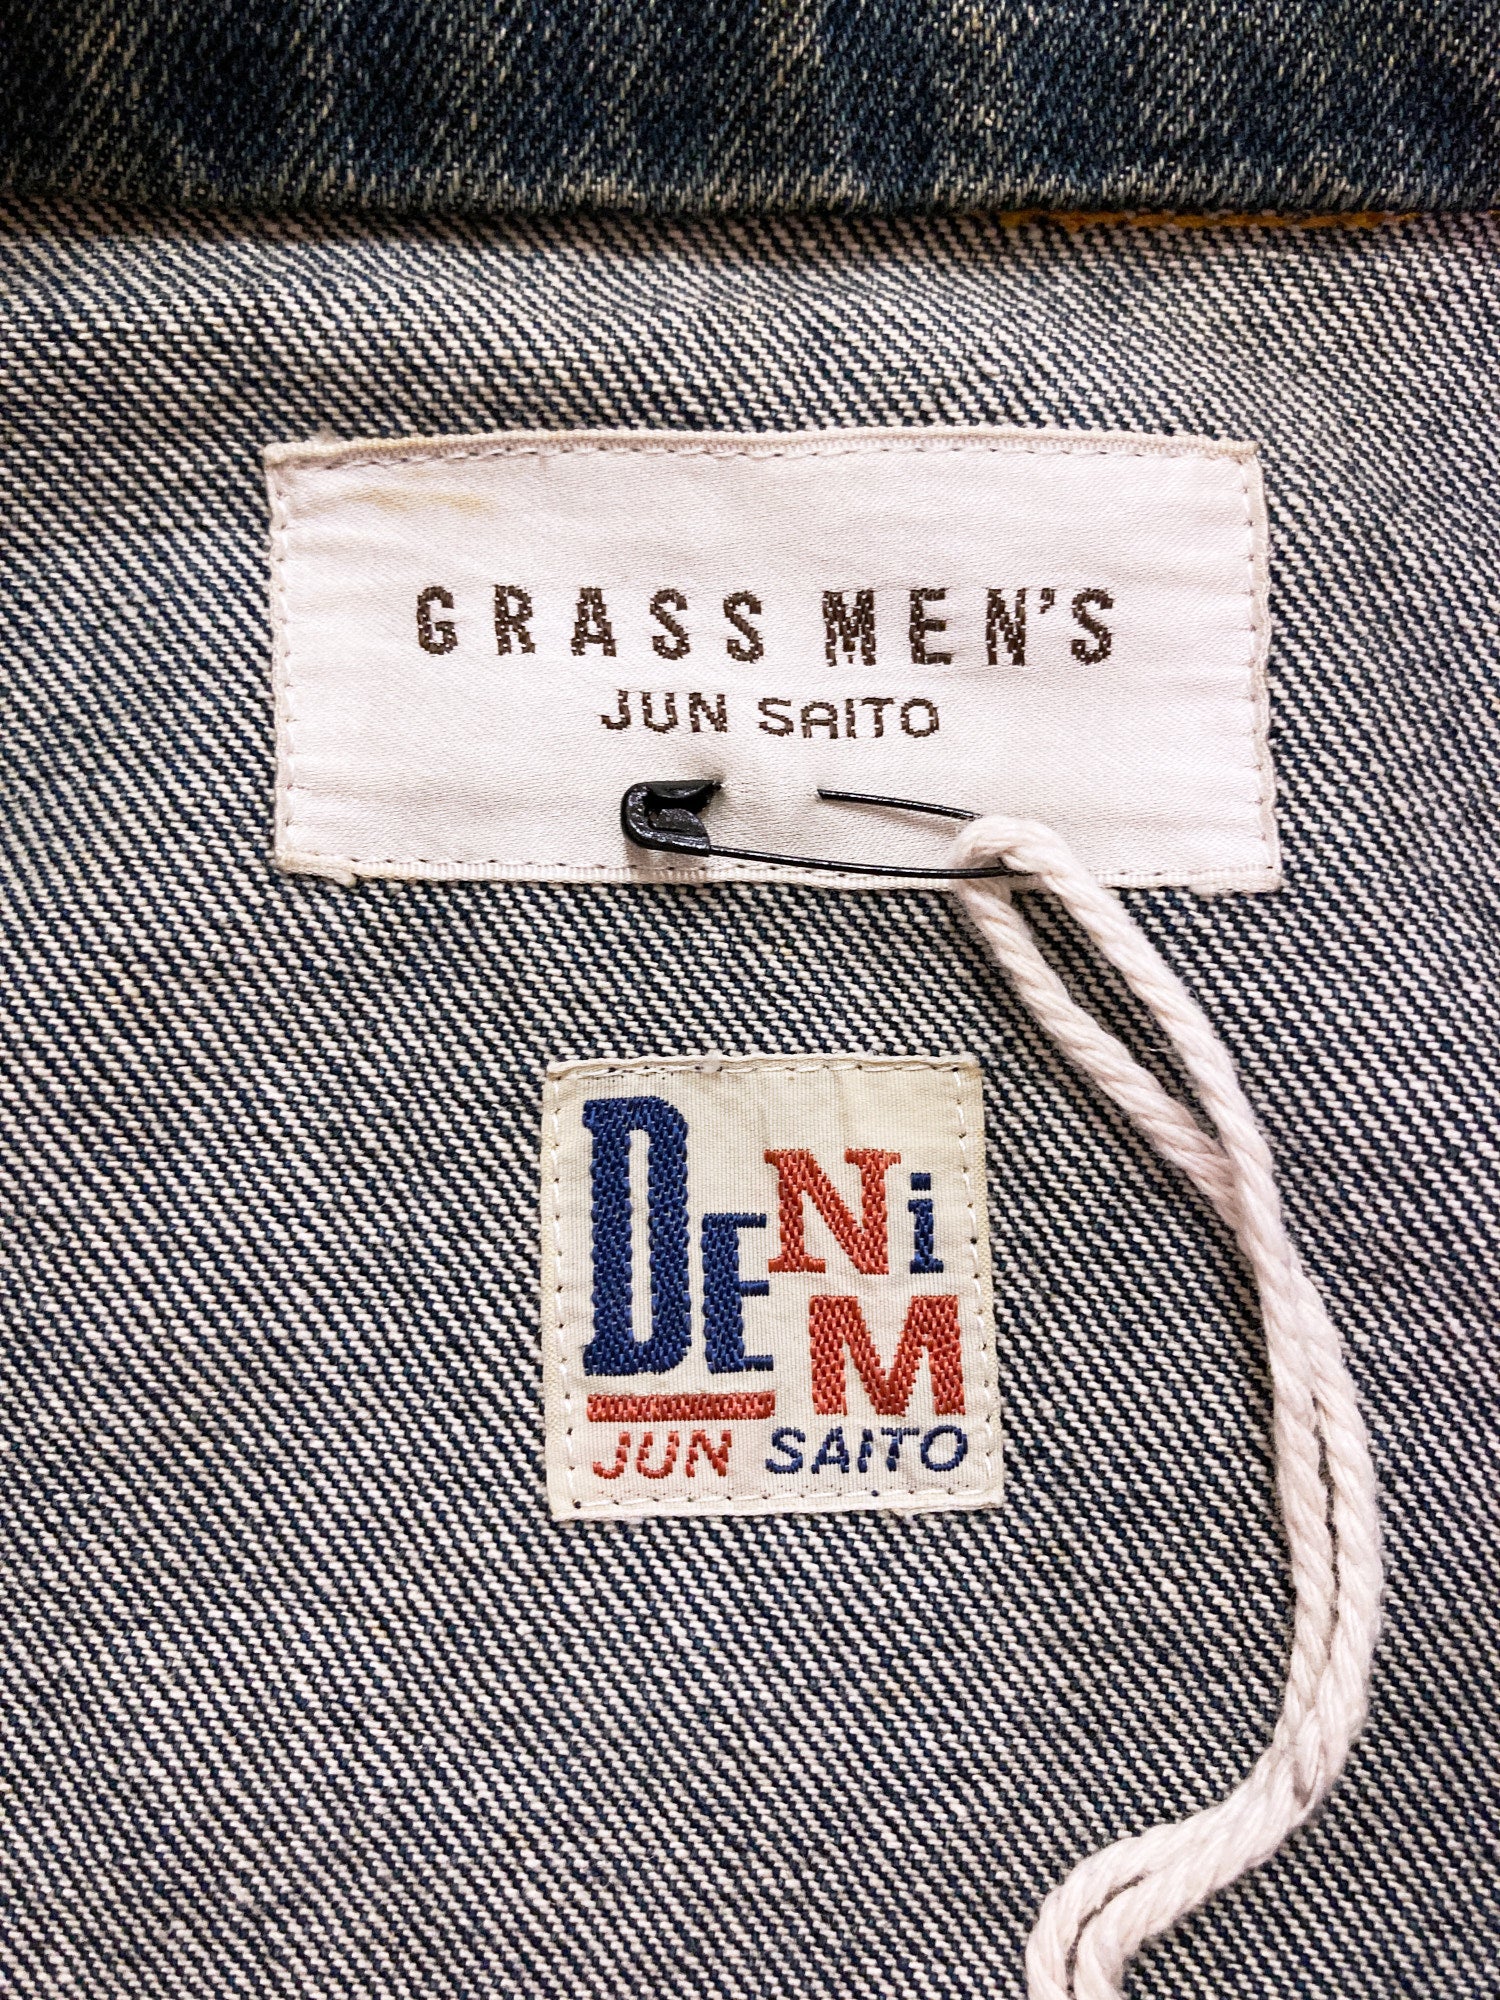 Grass Men's 'Jun Saito Denim' 1980s cropped indigo denim jacket - M